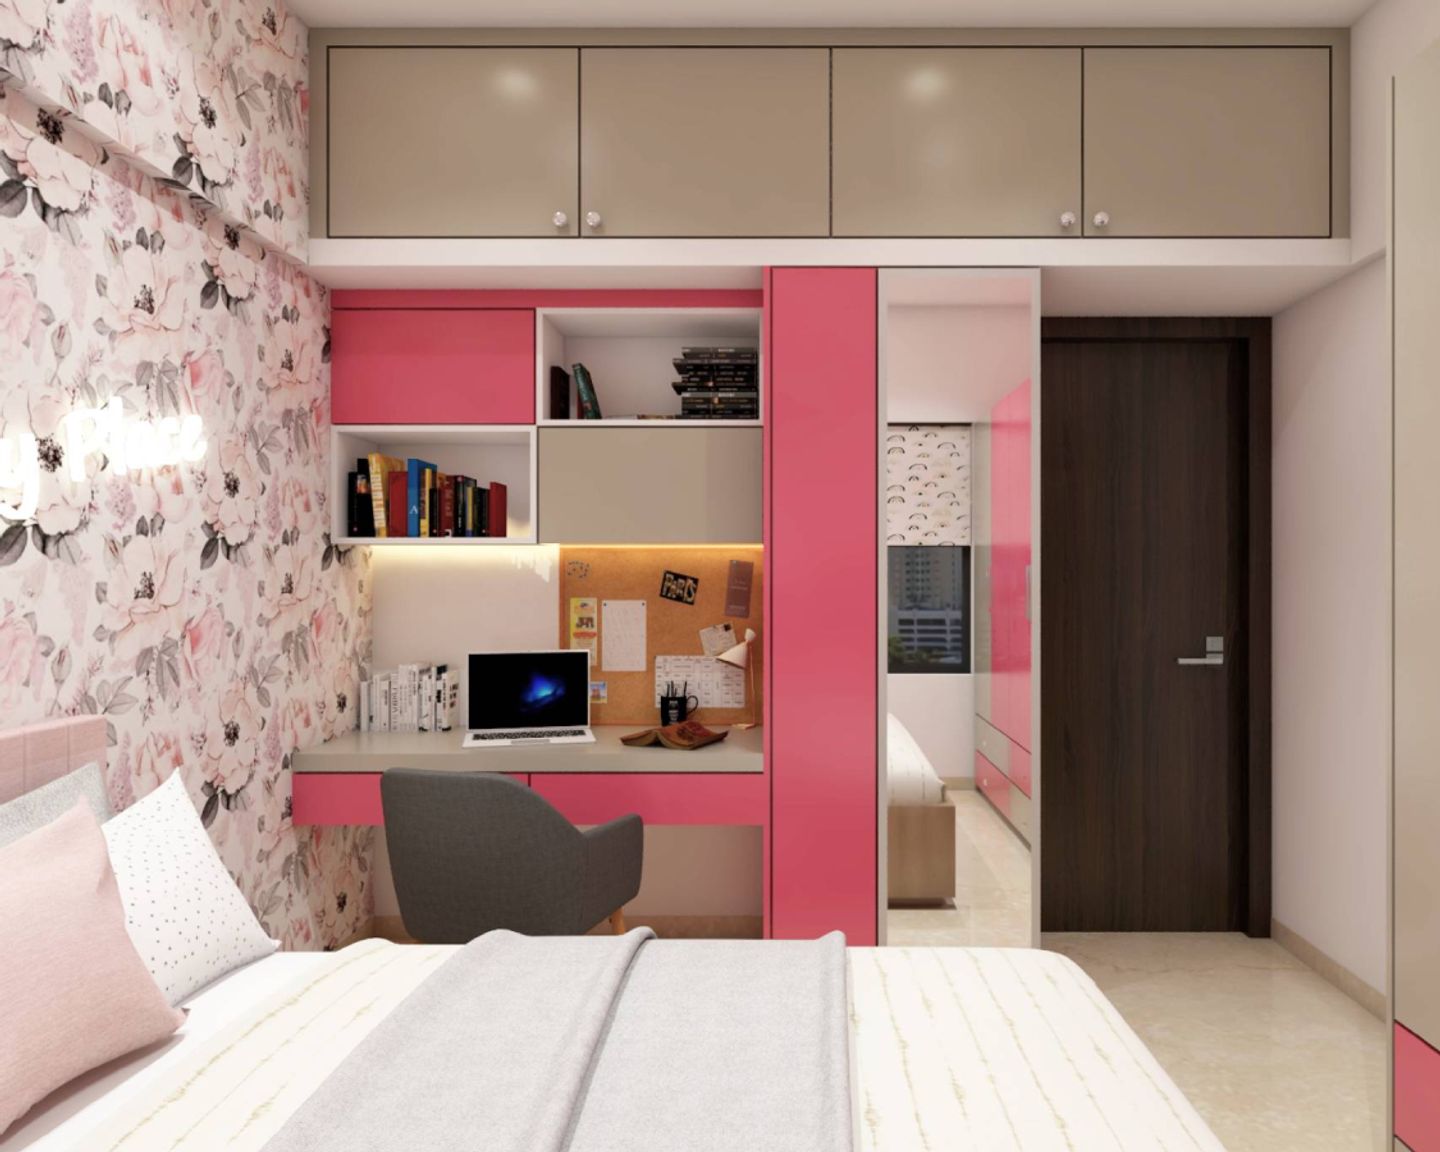 Modern Kids Room Design For Girls With Floral Wallpaper